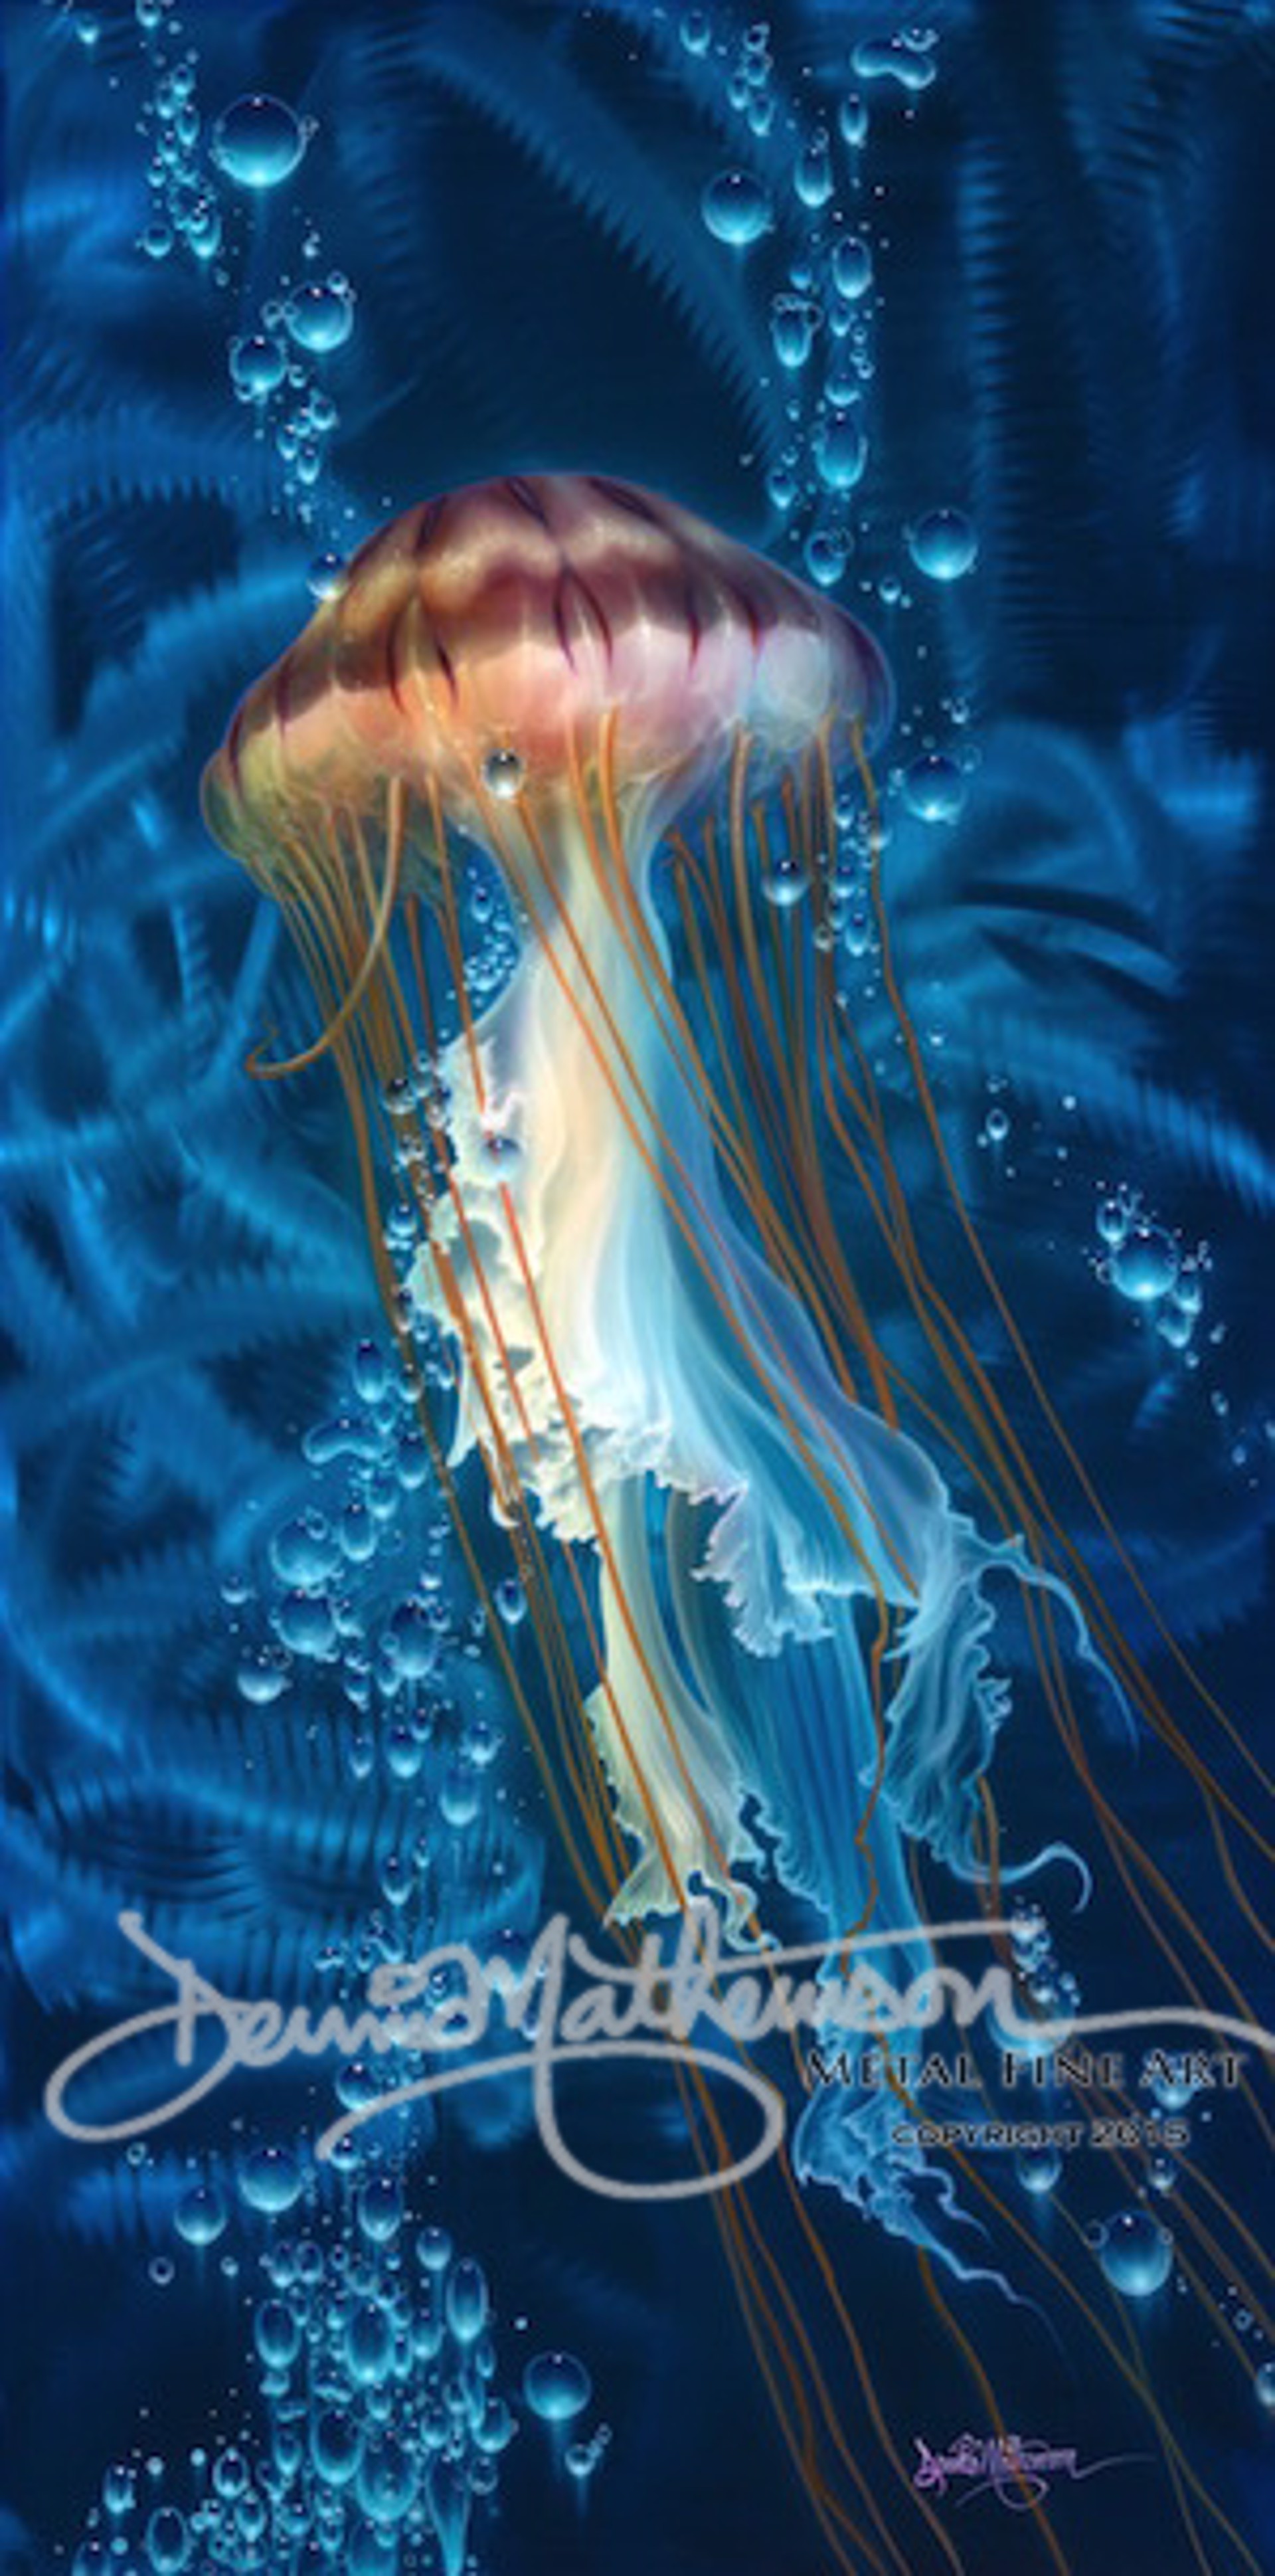 Jelly Sea 6 by Dennis Mathewson